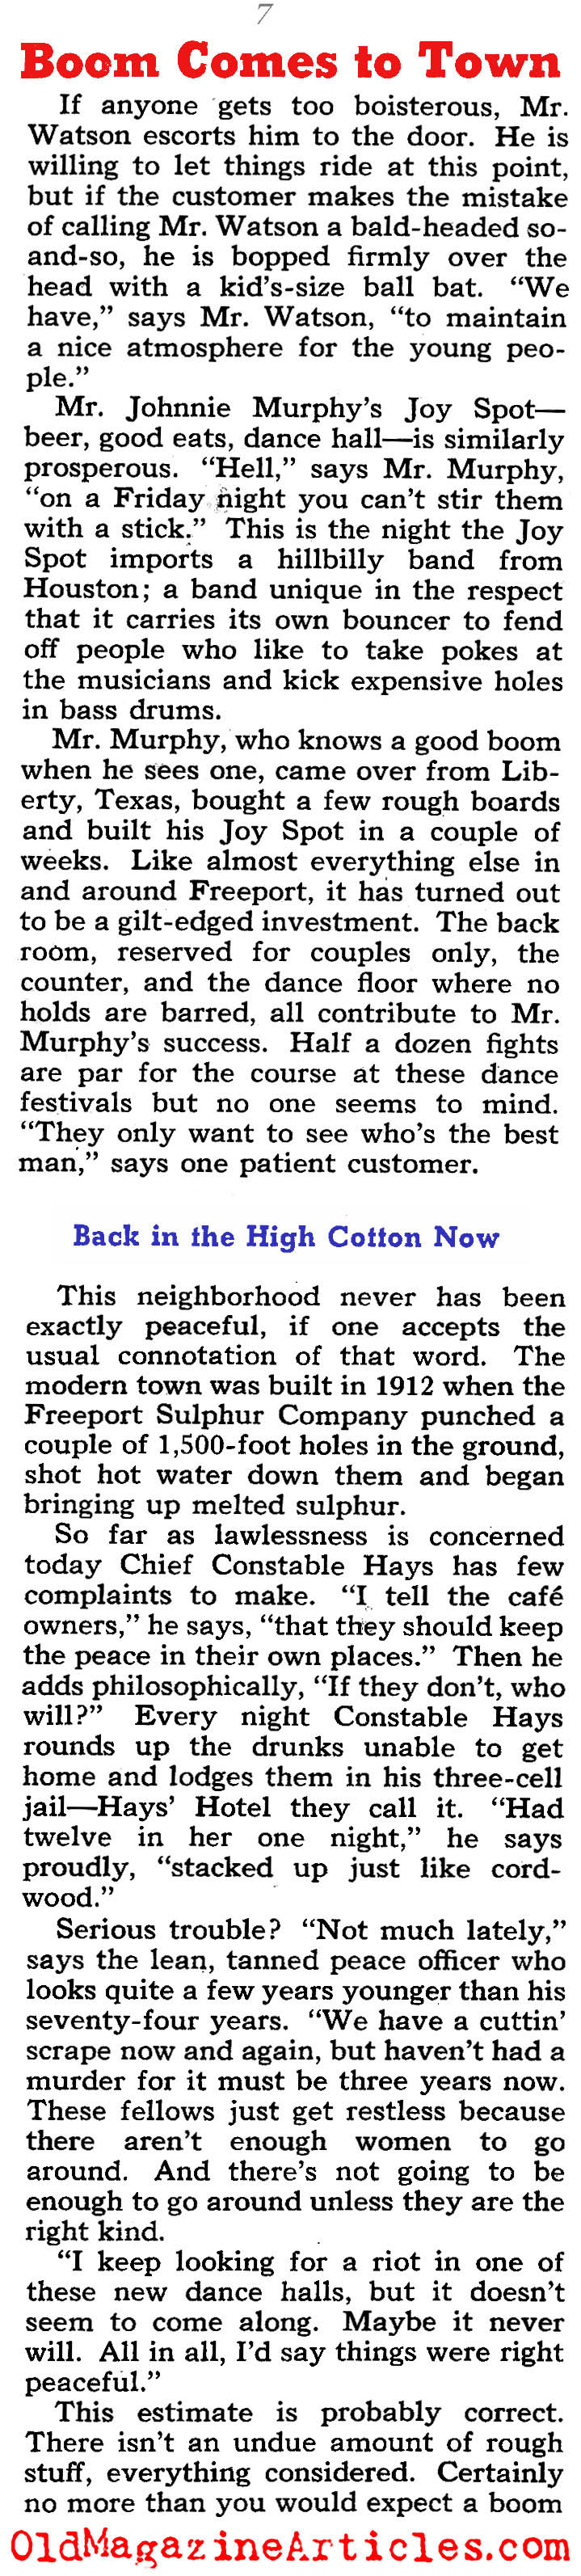 Prosperity Returns to Freeport, Texas  (Collier's Magazine, 1940)